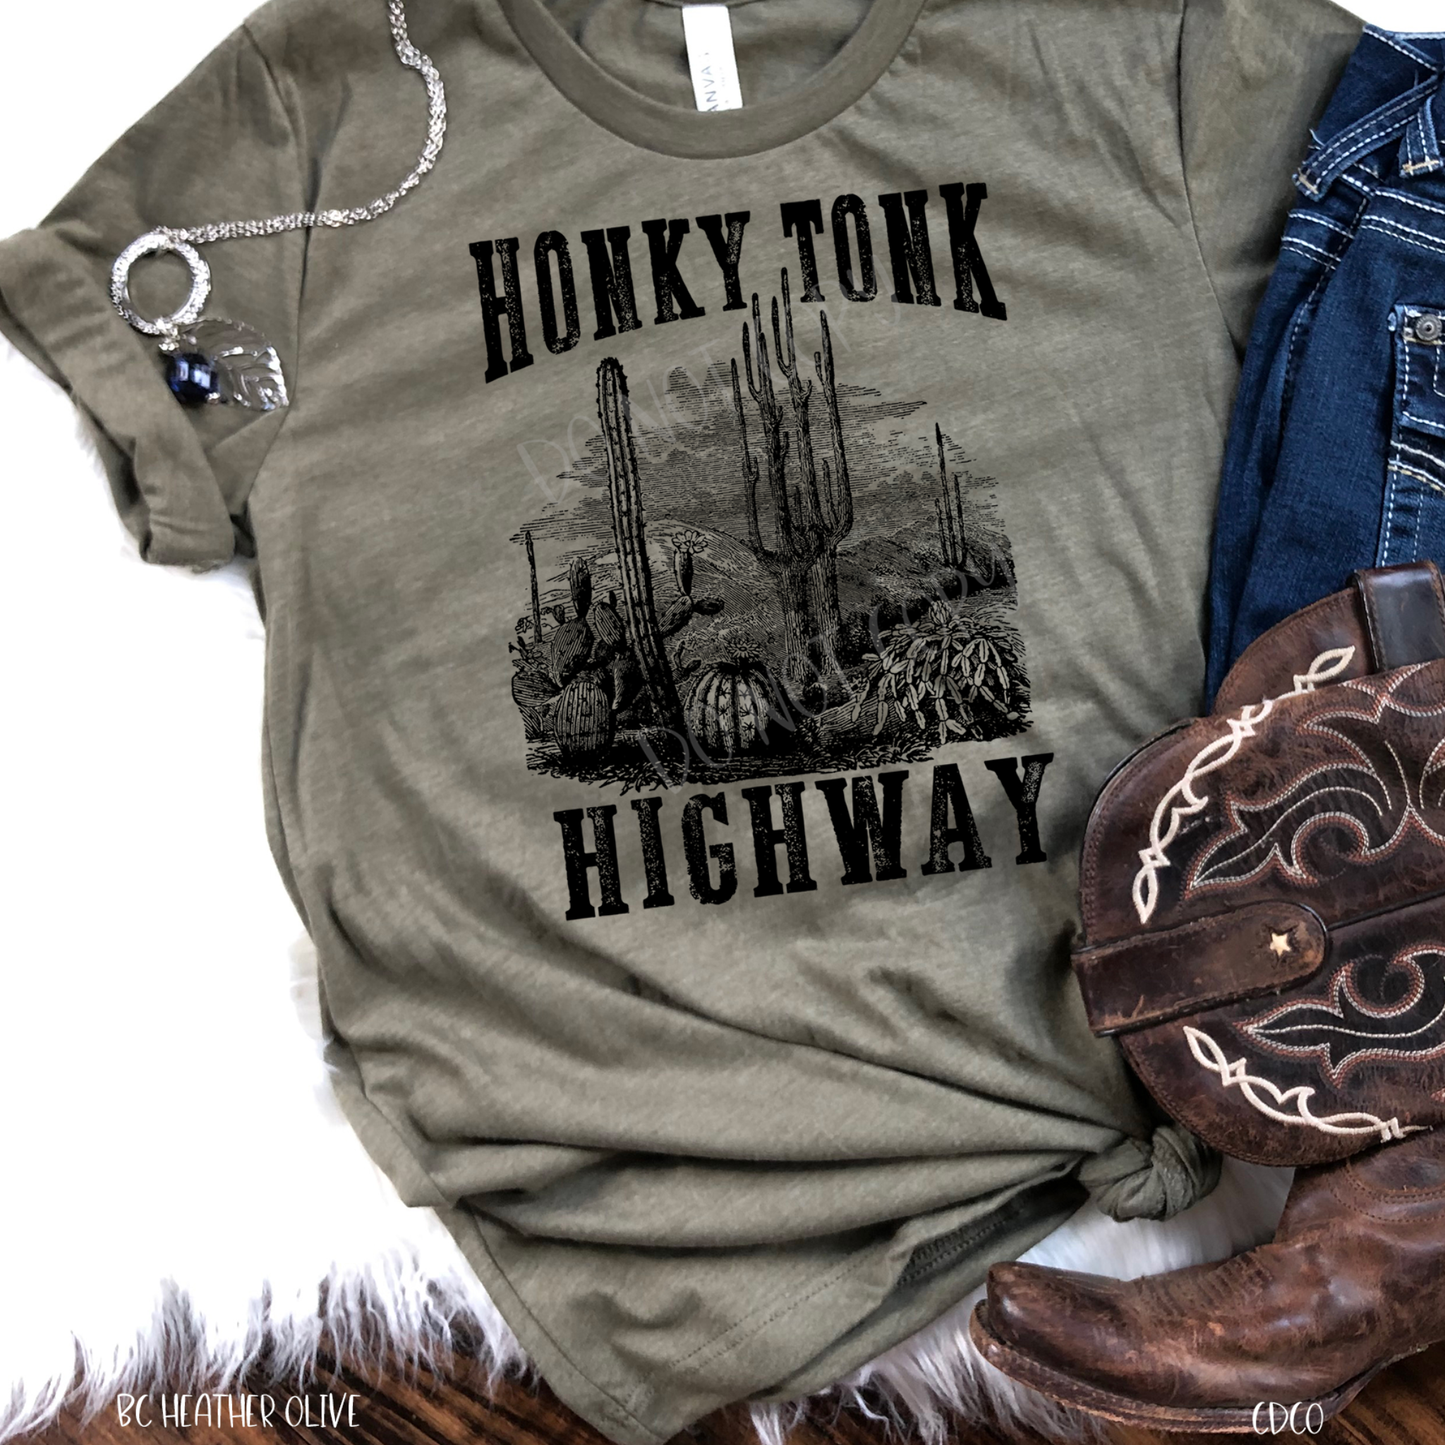 Honky Tonk Highway (325°)